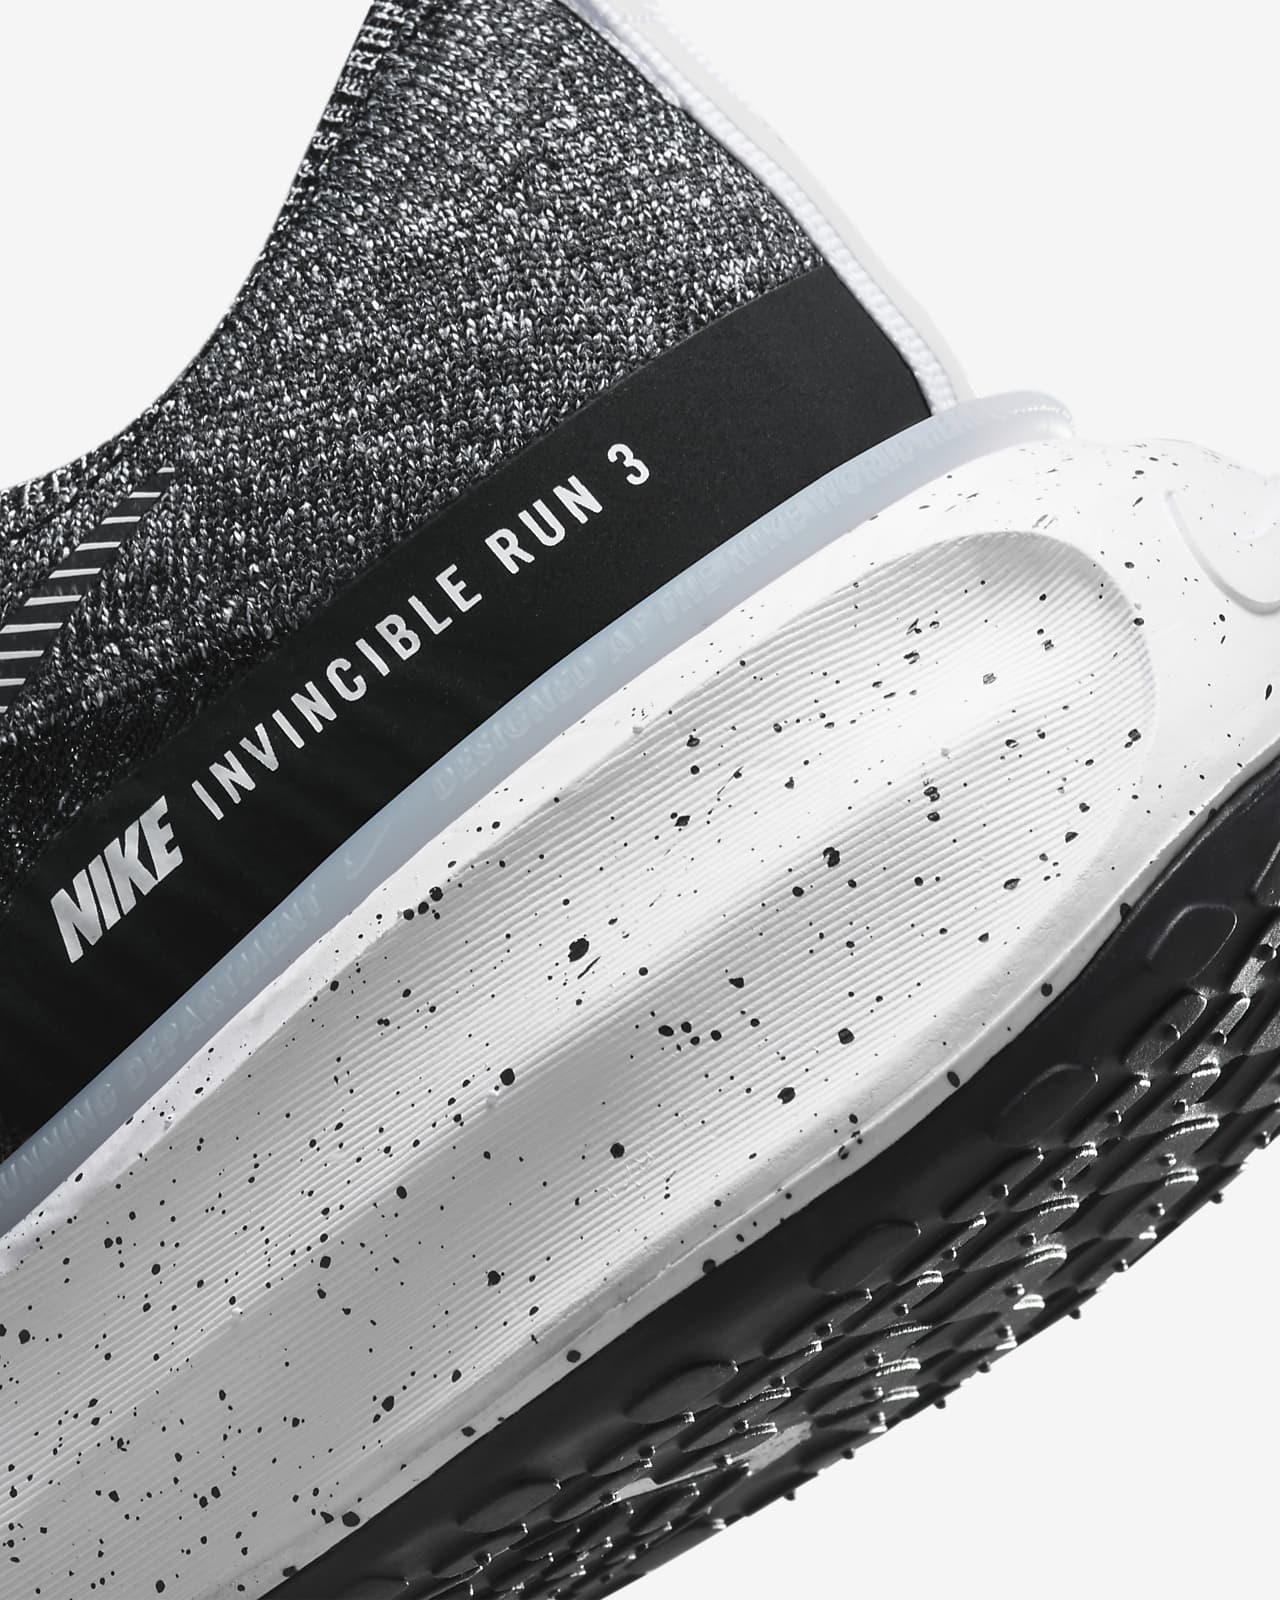 Nike Invincible 3 SE Men's Road Running Shoes.